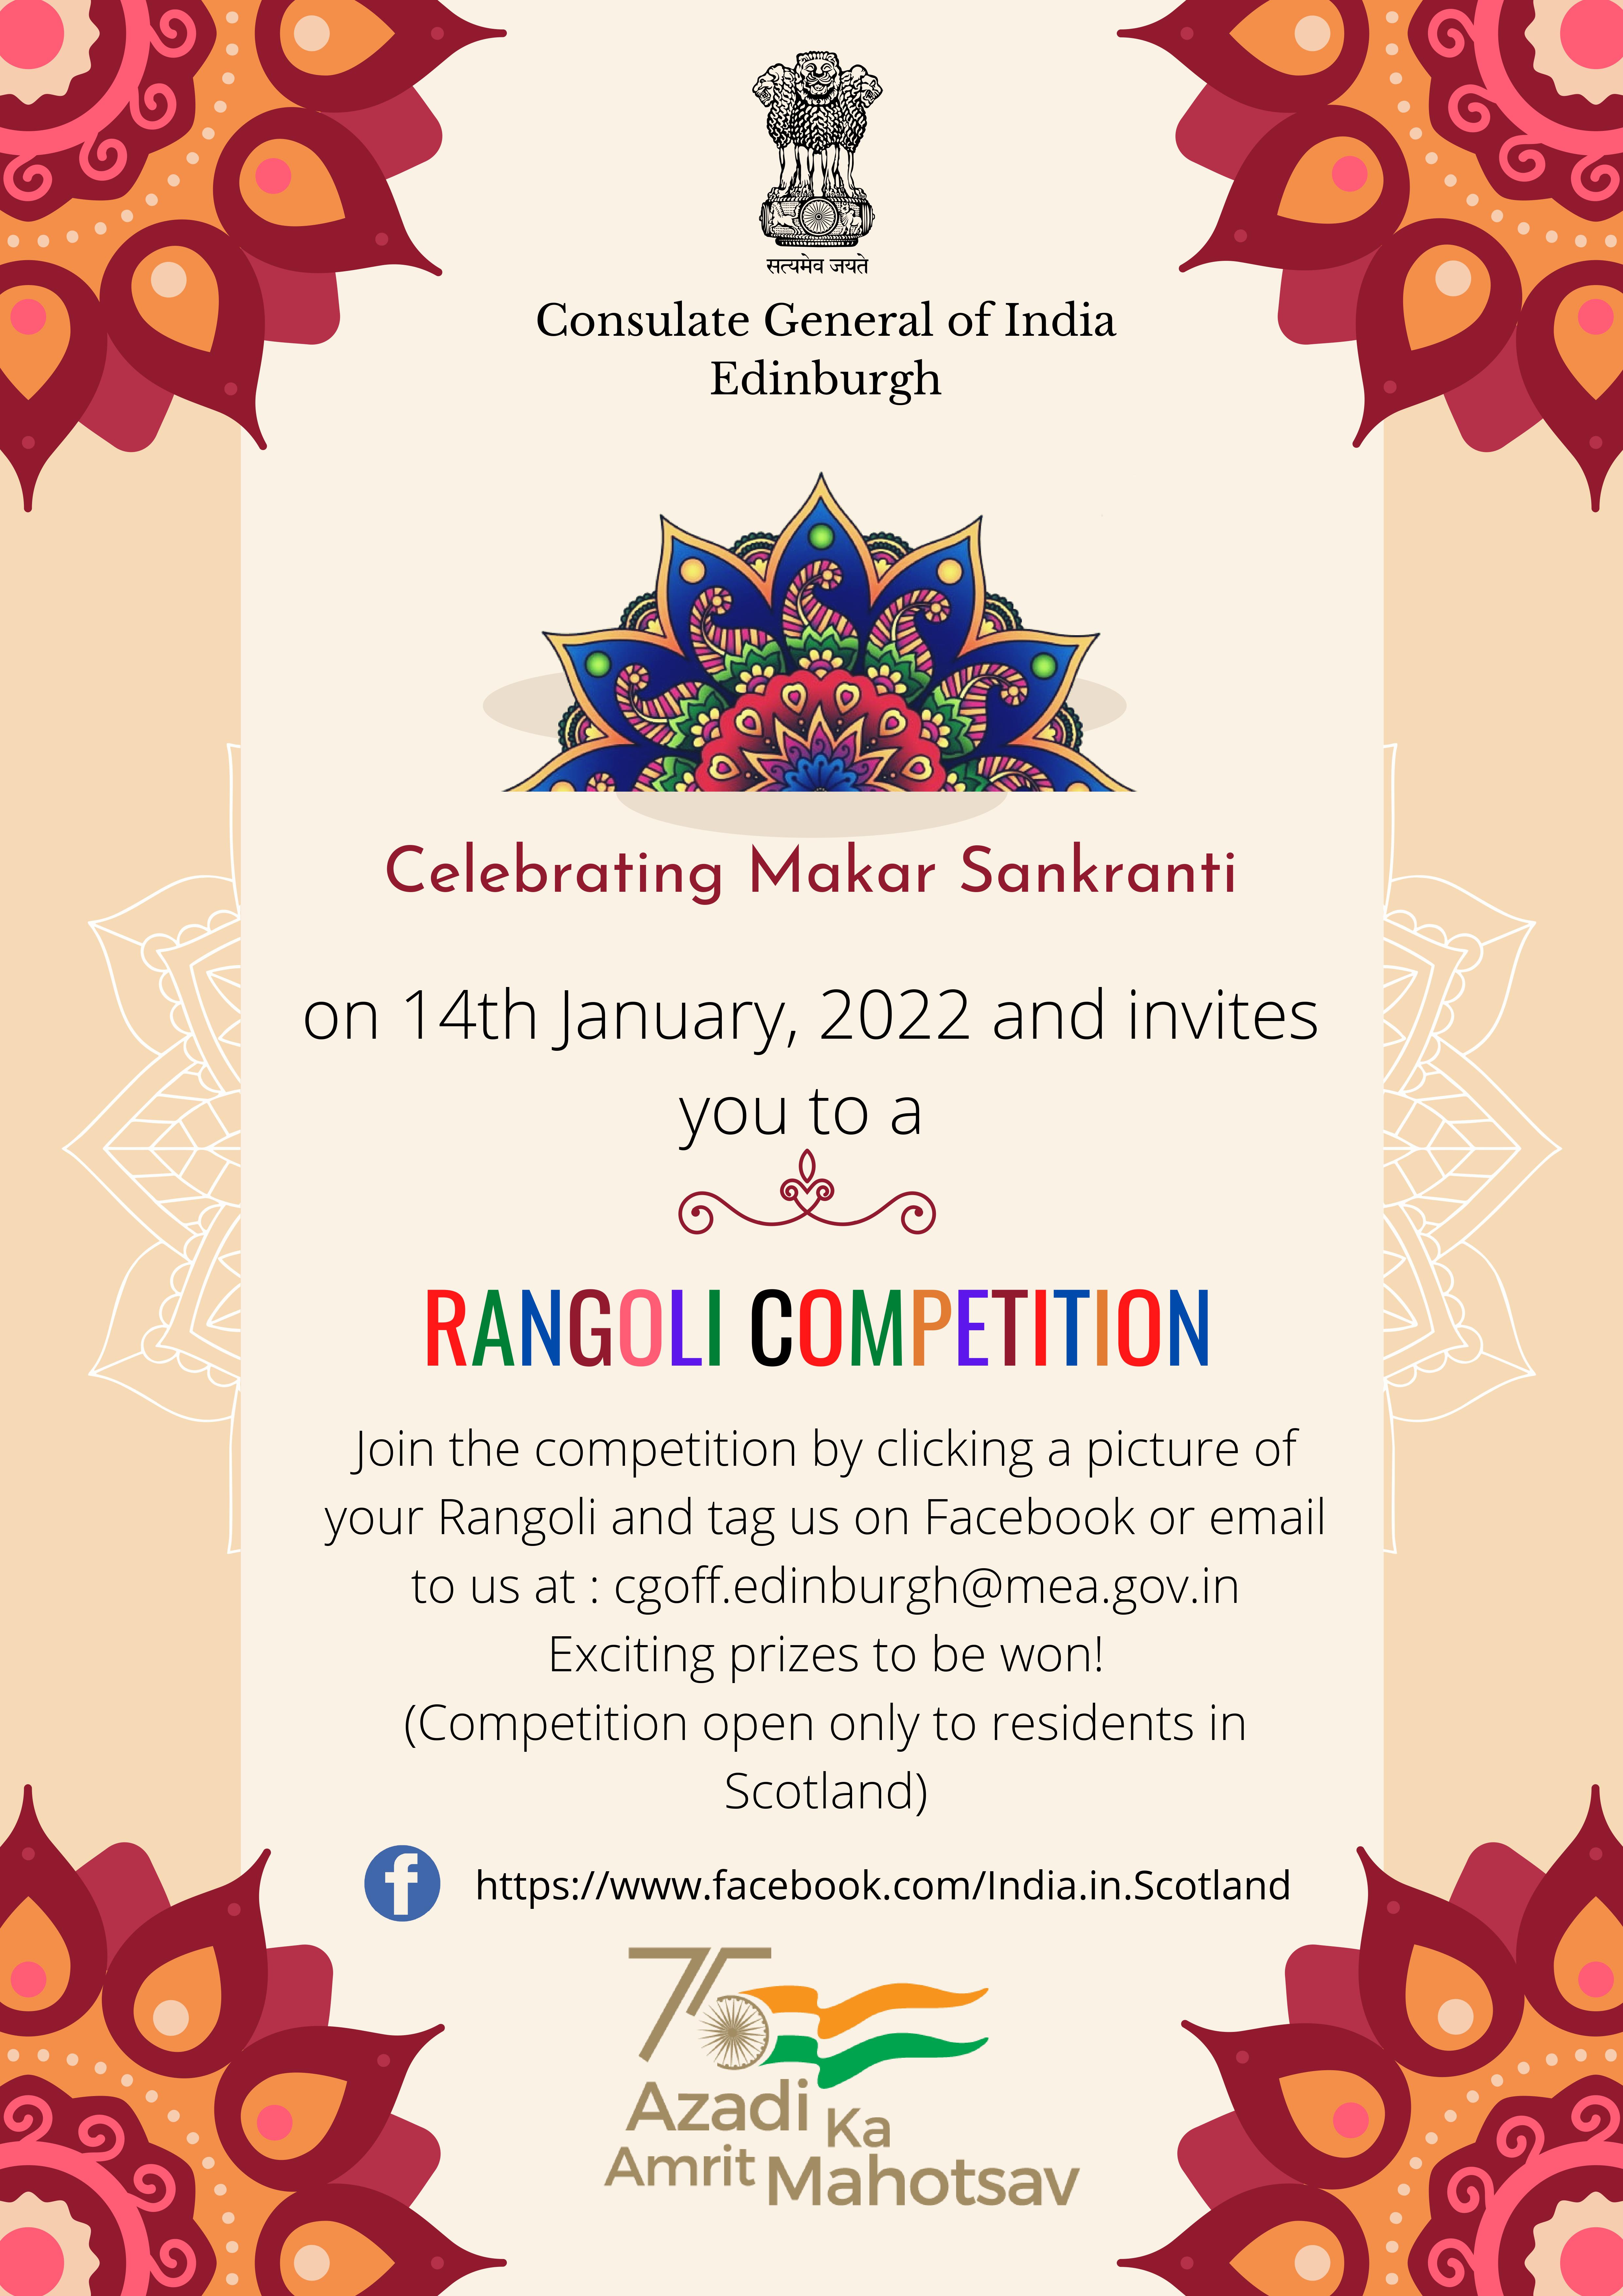 Rangoli Competition